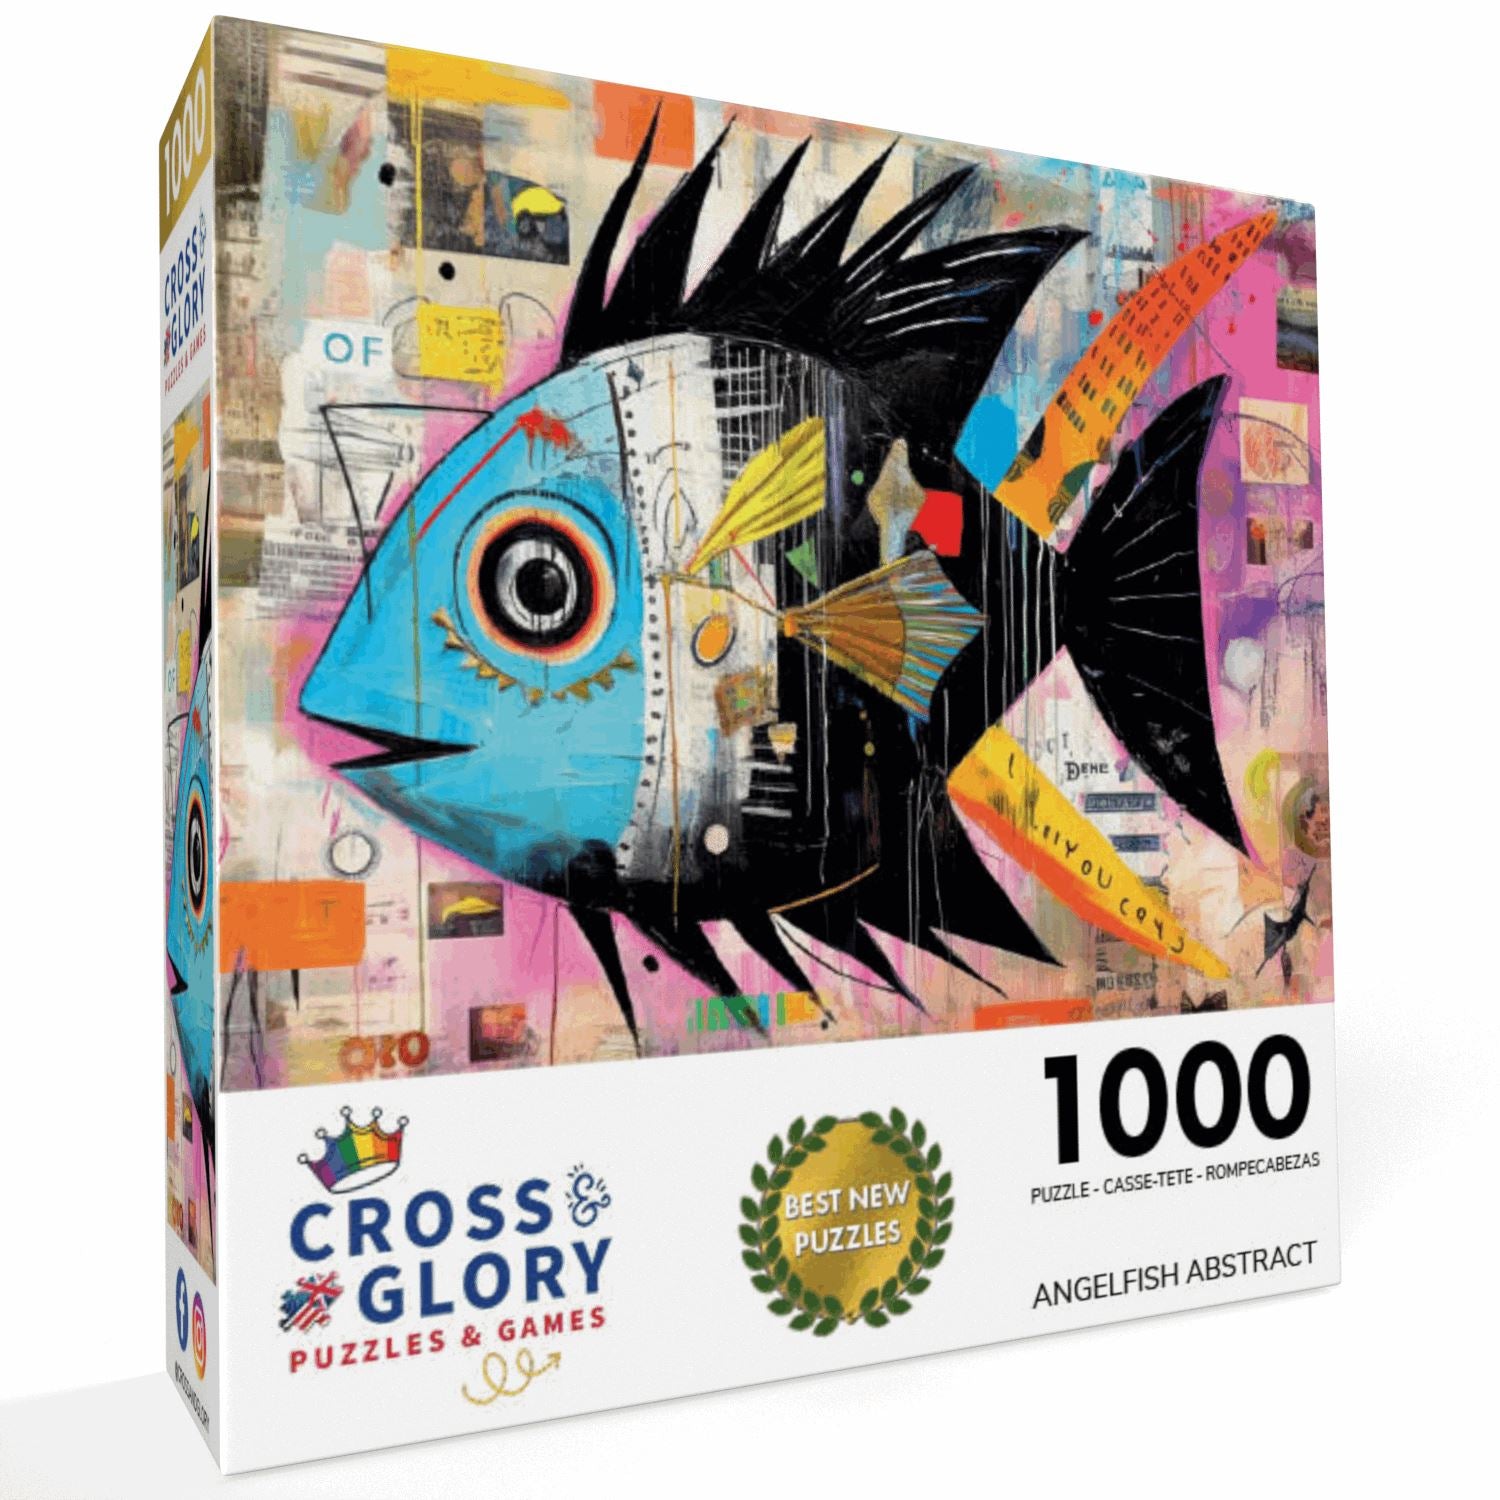 Angelfish Abstract - 1000 Piece Jigsaw Puzzle Jigsaw Puzzles Cross & Glory